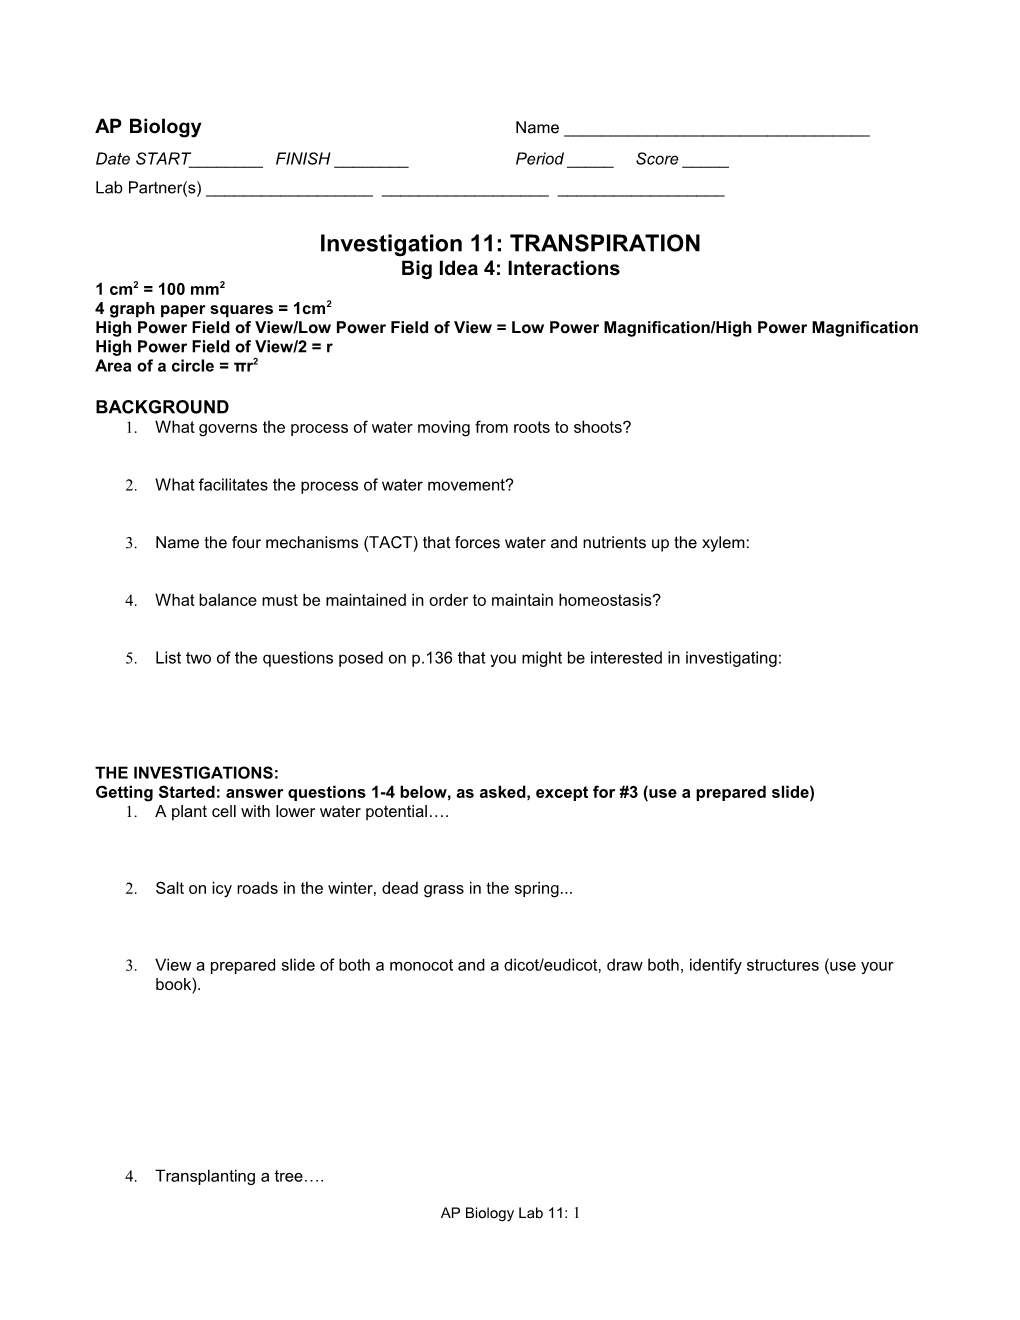 Investigation 11: TRANSPIRATION